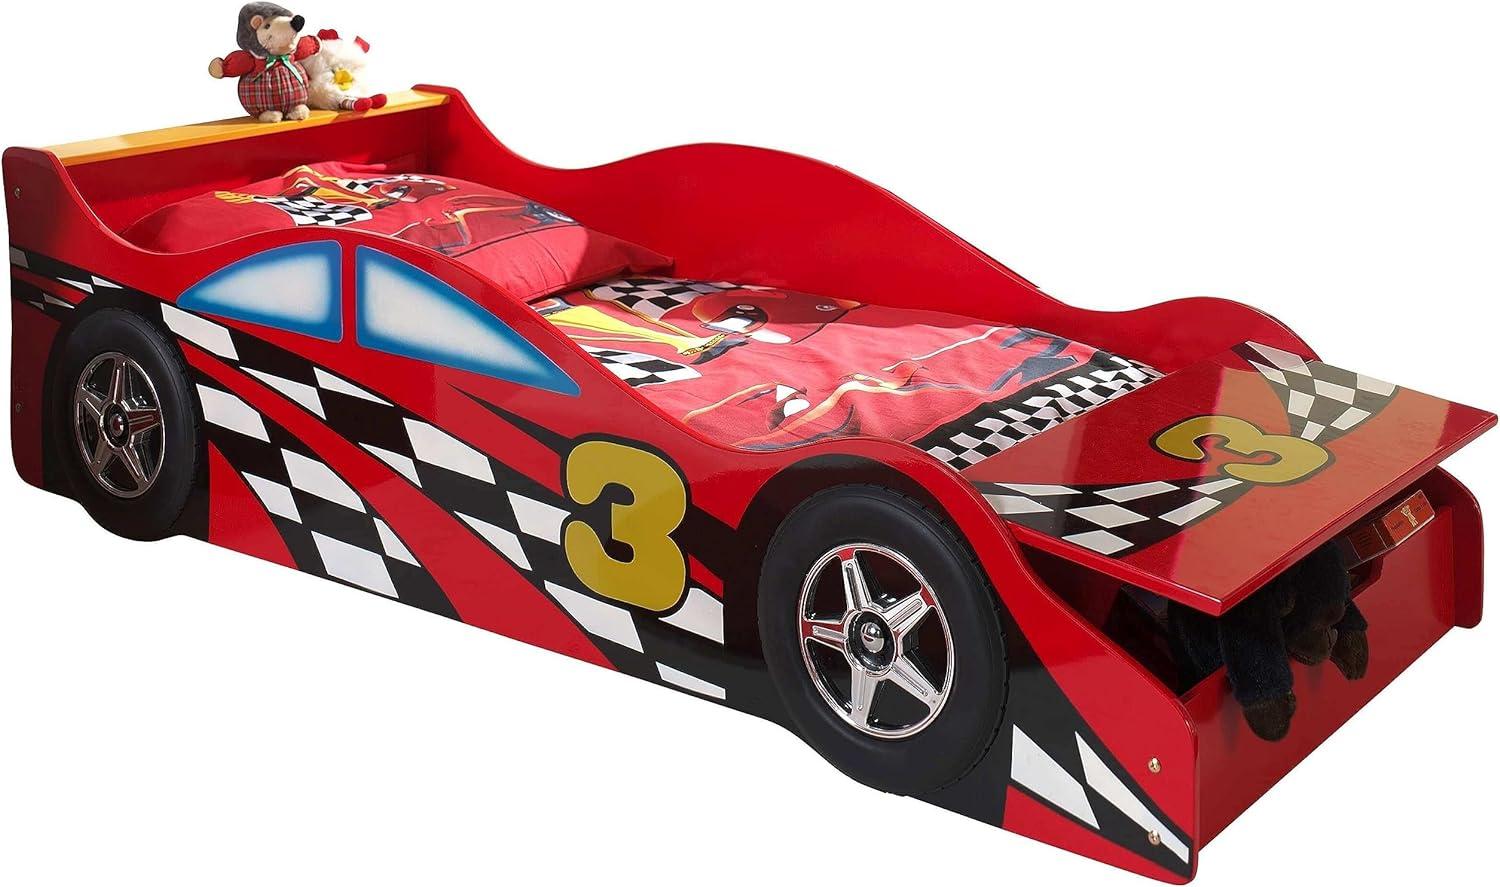 Set RACE CAR Kinder-Autobett inkl. Matratze, mit 70 x 140 cm Liegefläche, Ausf. MDF rot glänzend lackiert Bild 1